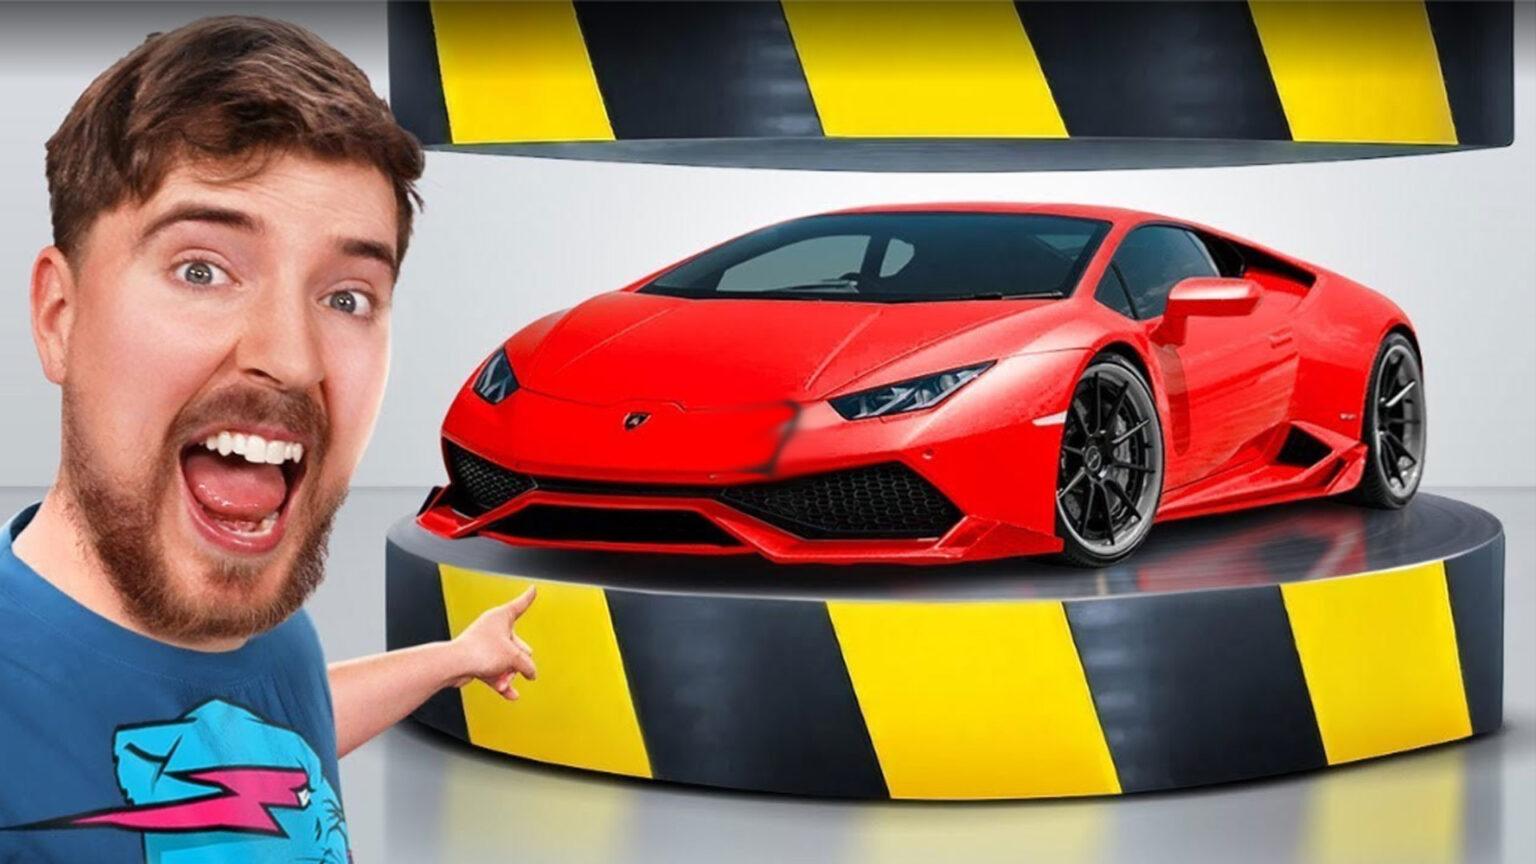 Why Did MrBeast Unconventionally Demolish a $200,000 Lamborghini?